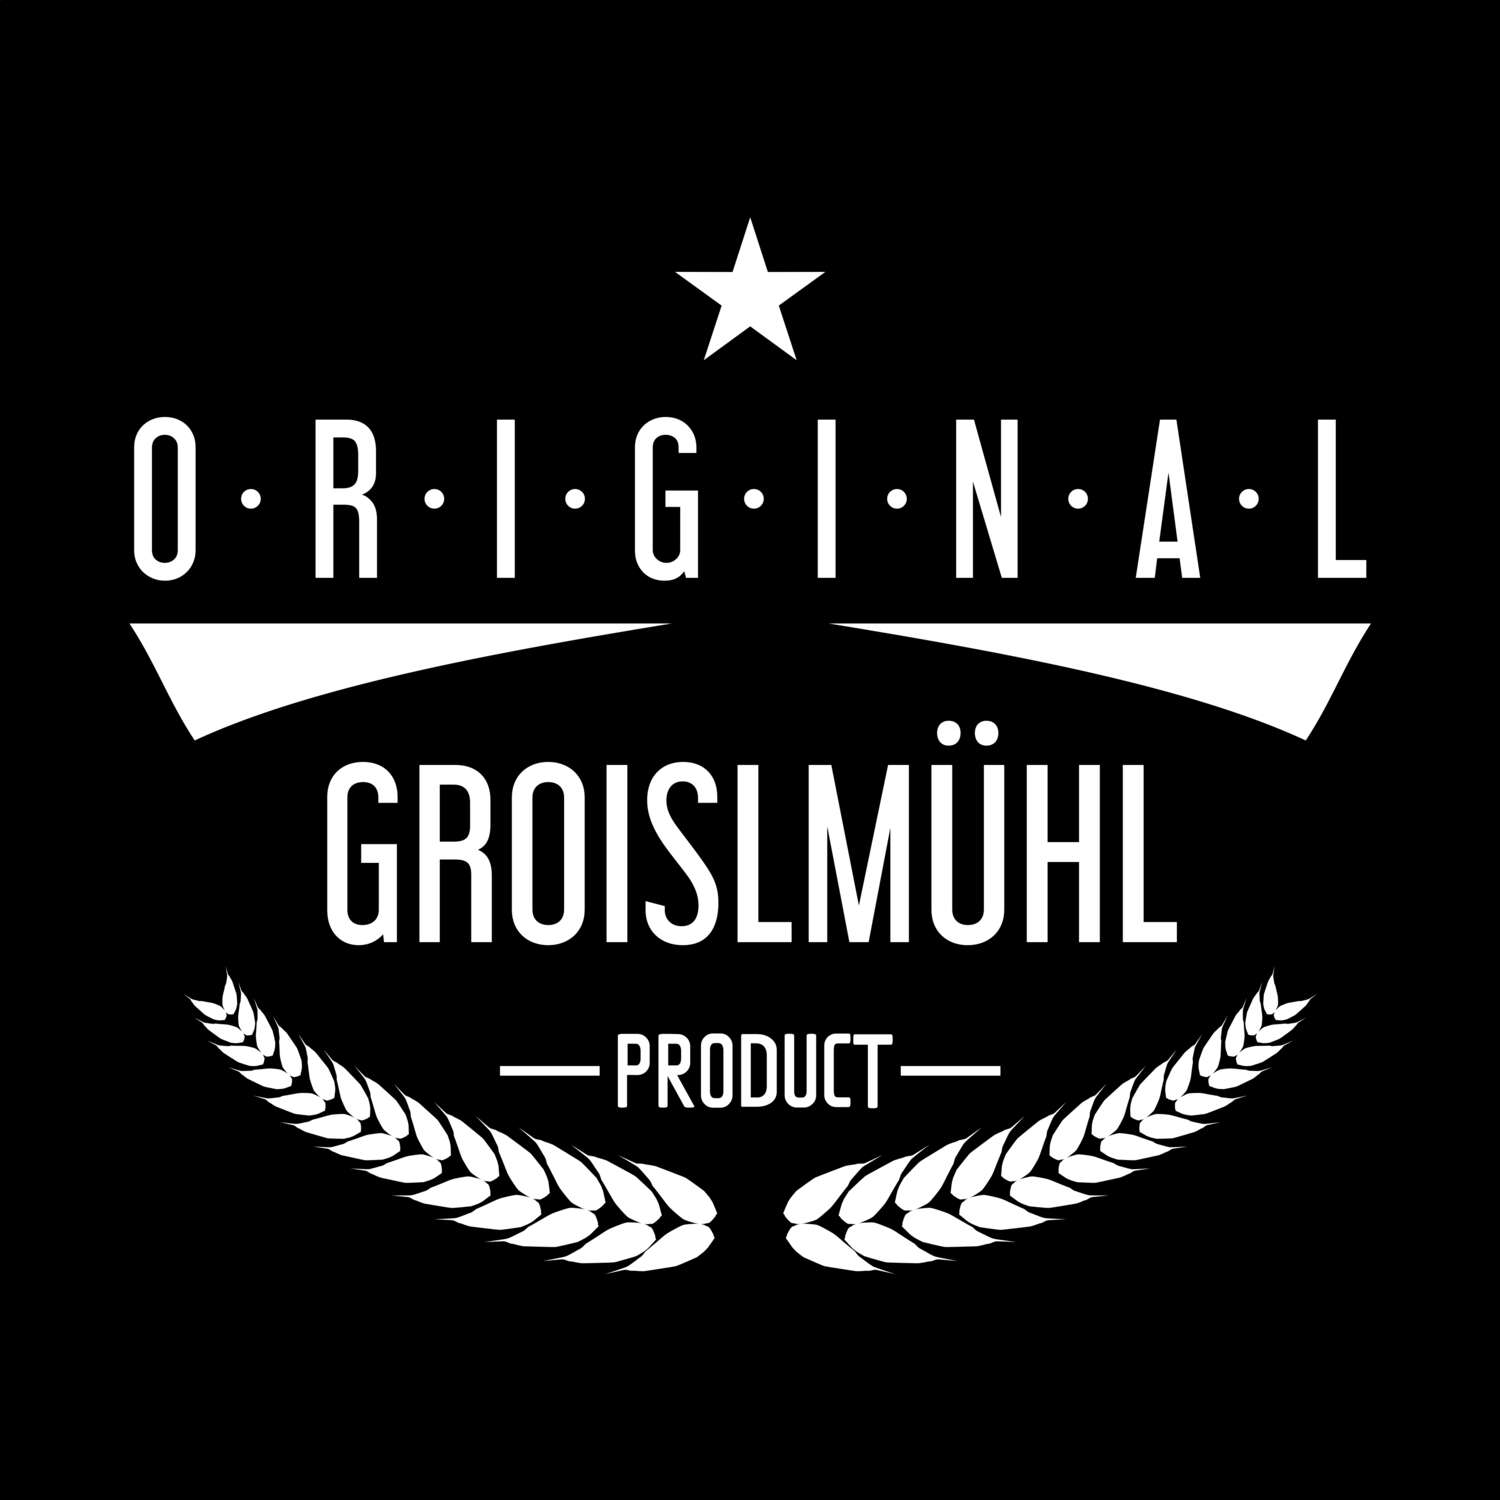 Groislmühl T-Shirt »Original Product«